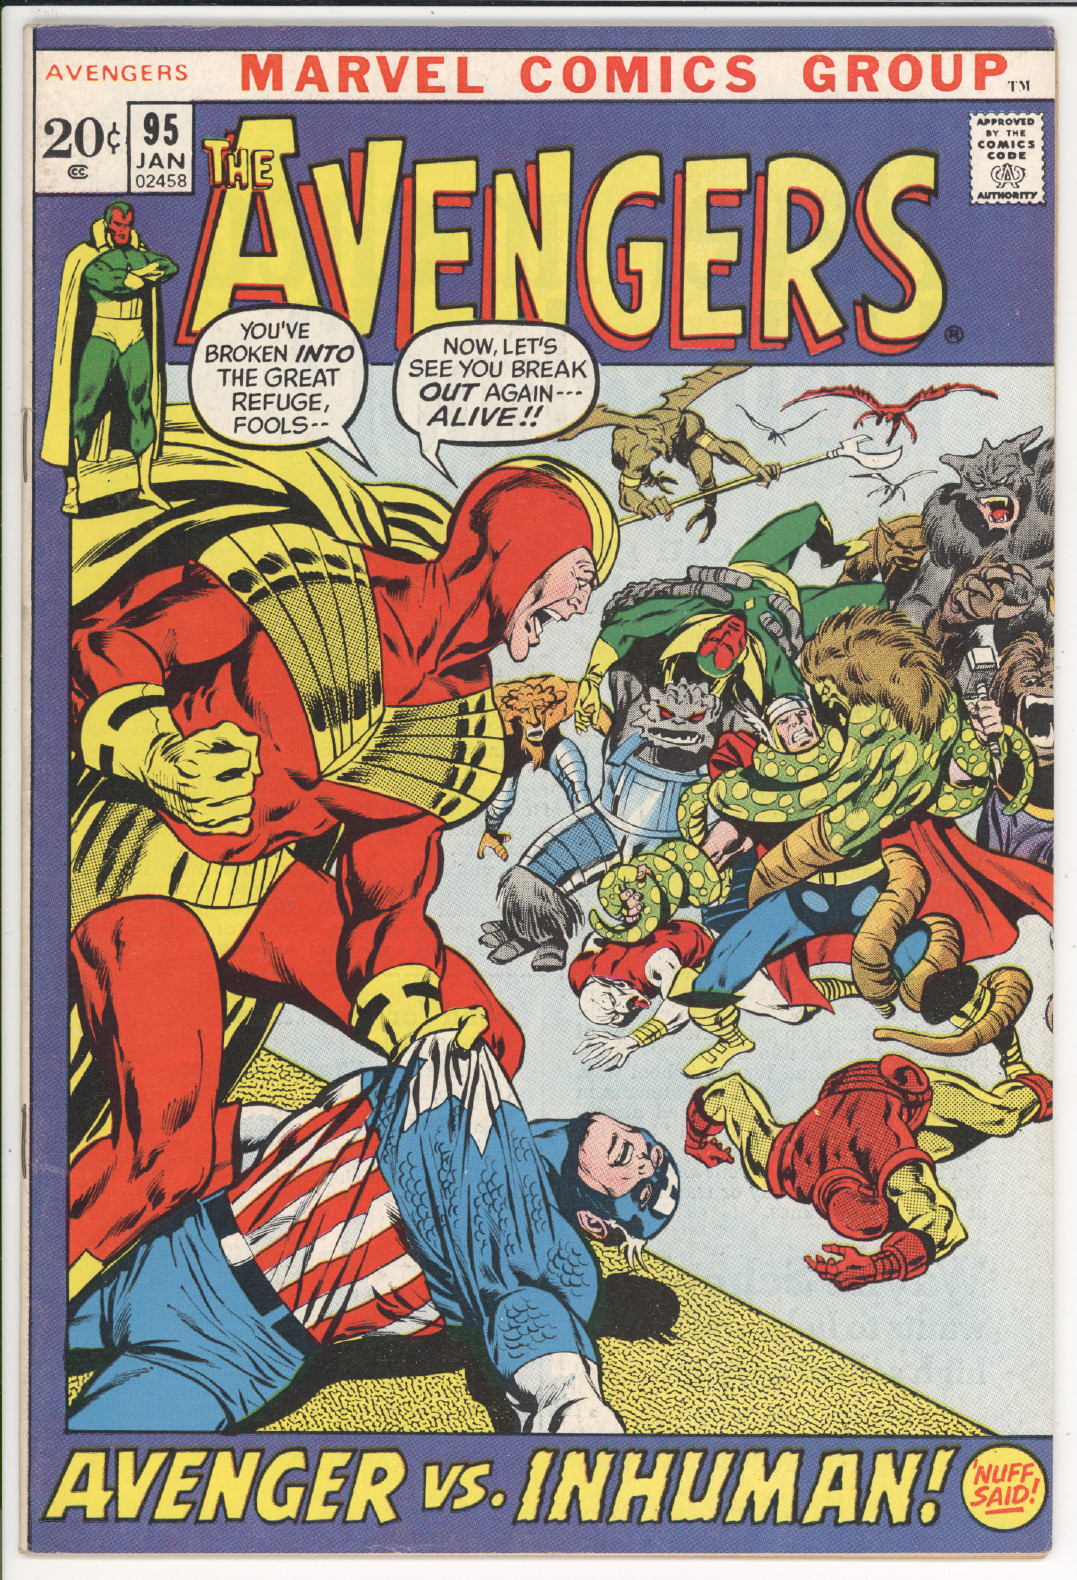 Avengers #95 front